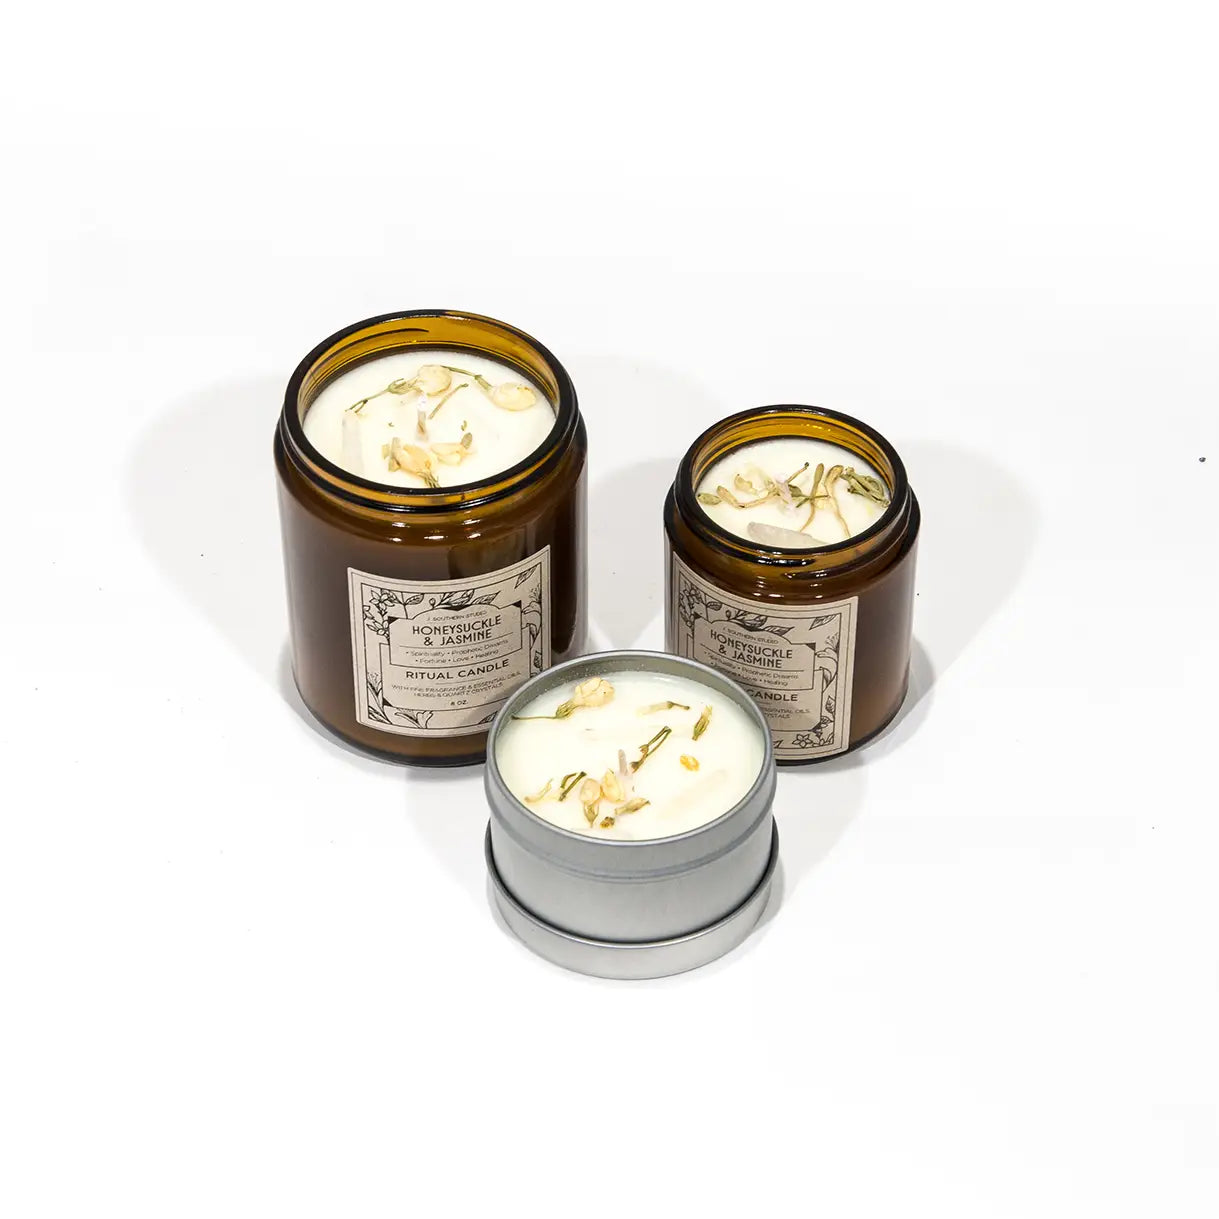 Honeysuckle & Jasmine Ritual Candle - 4 oz. Amber Glass Jar